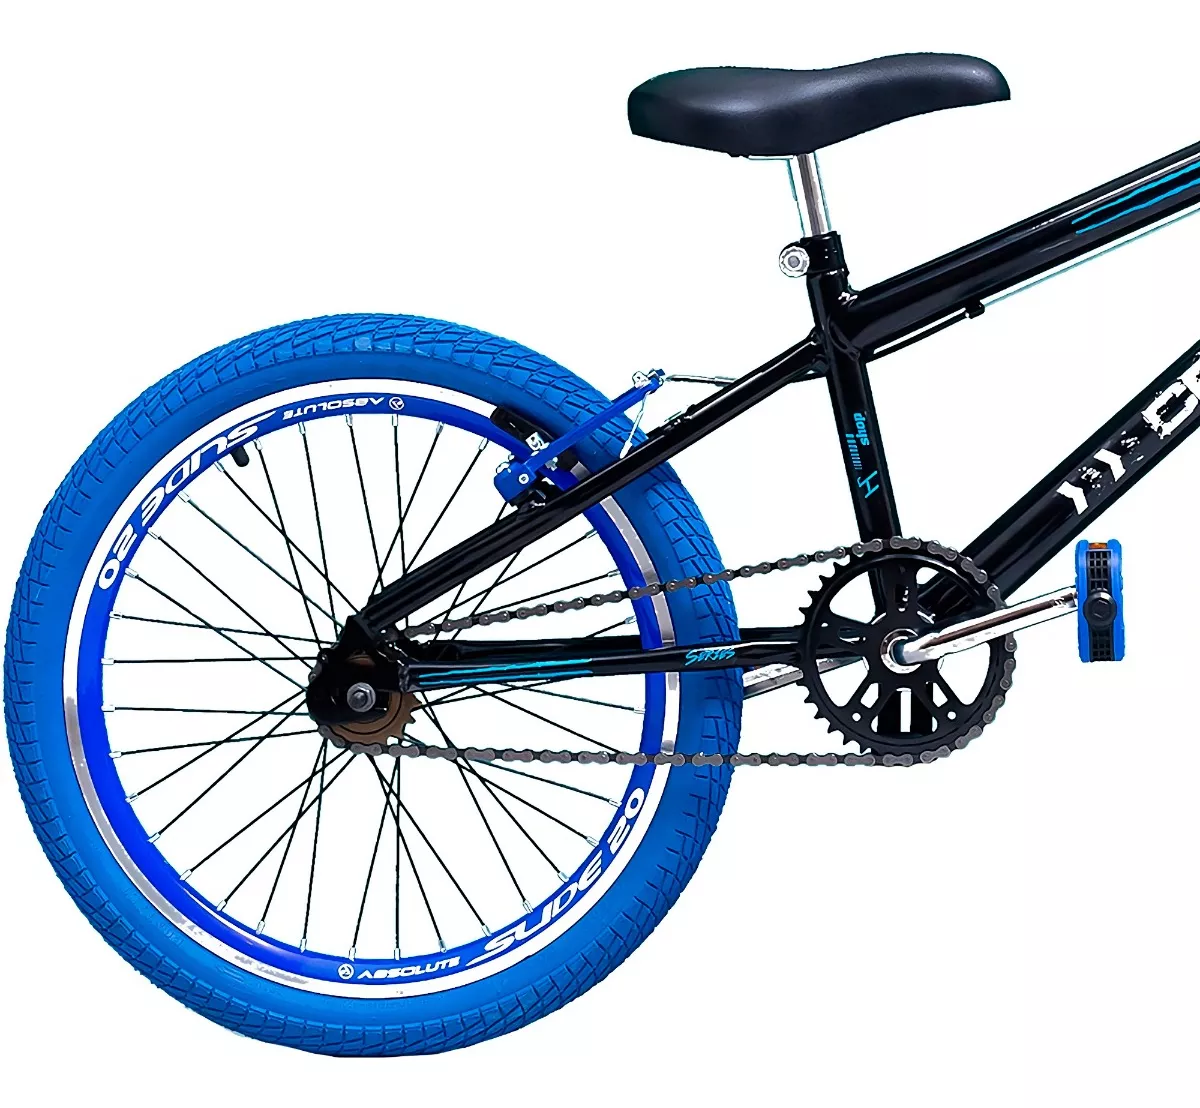 Bicicleta Pro-x Bmx Cross Serie 1 Aro 20 Branco / Azul - CIA do